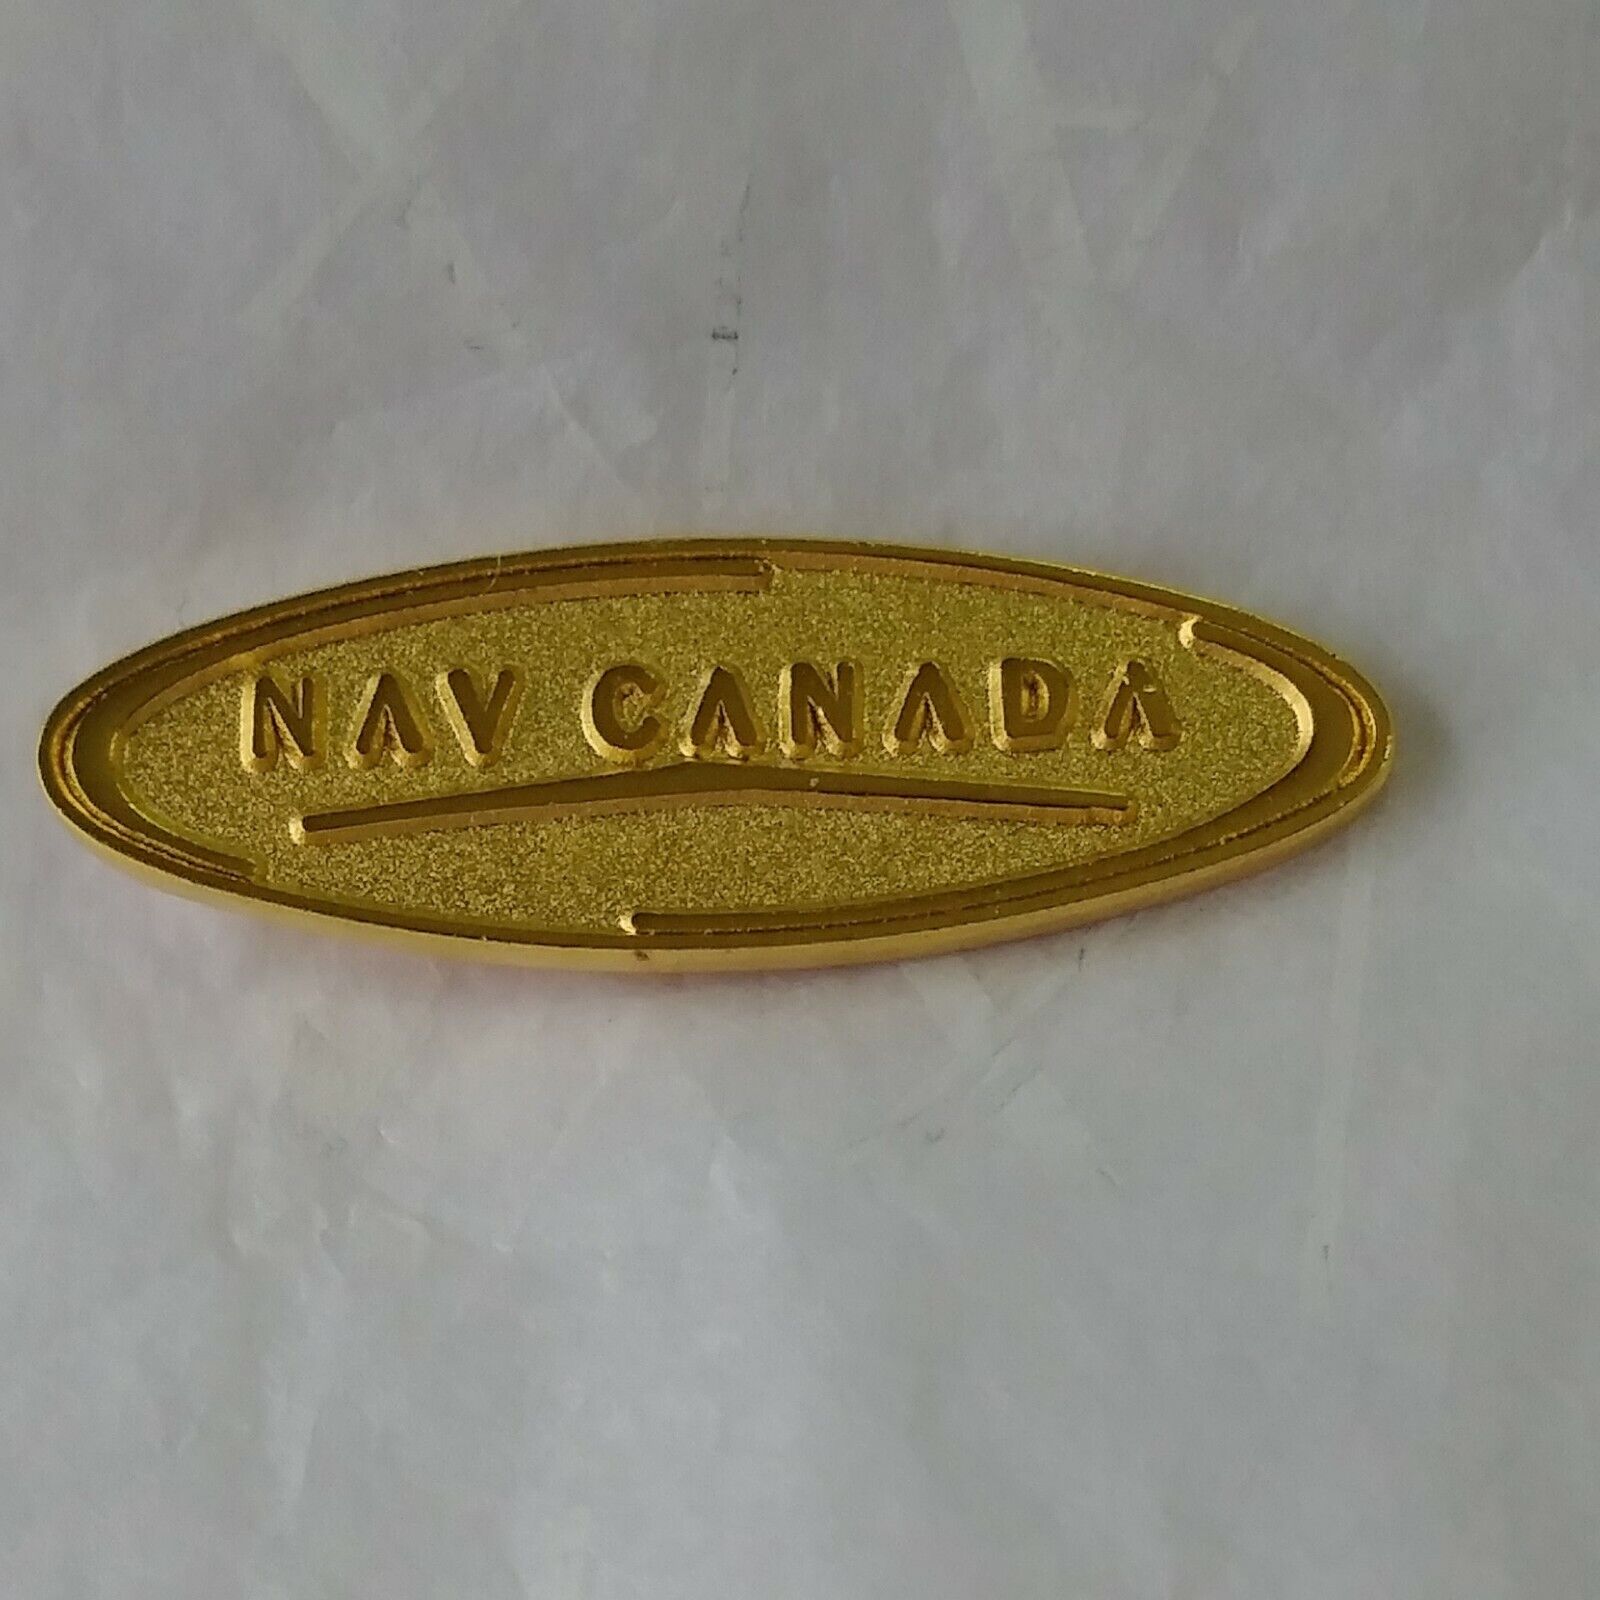 NAV CANADA Lapel Pin Canadian Civil Air Navigation Management Gold Color Oval